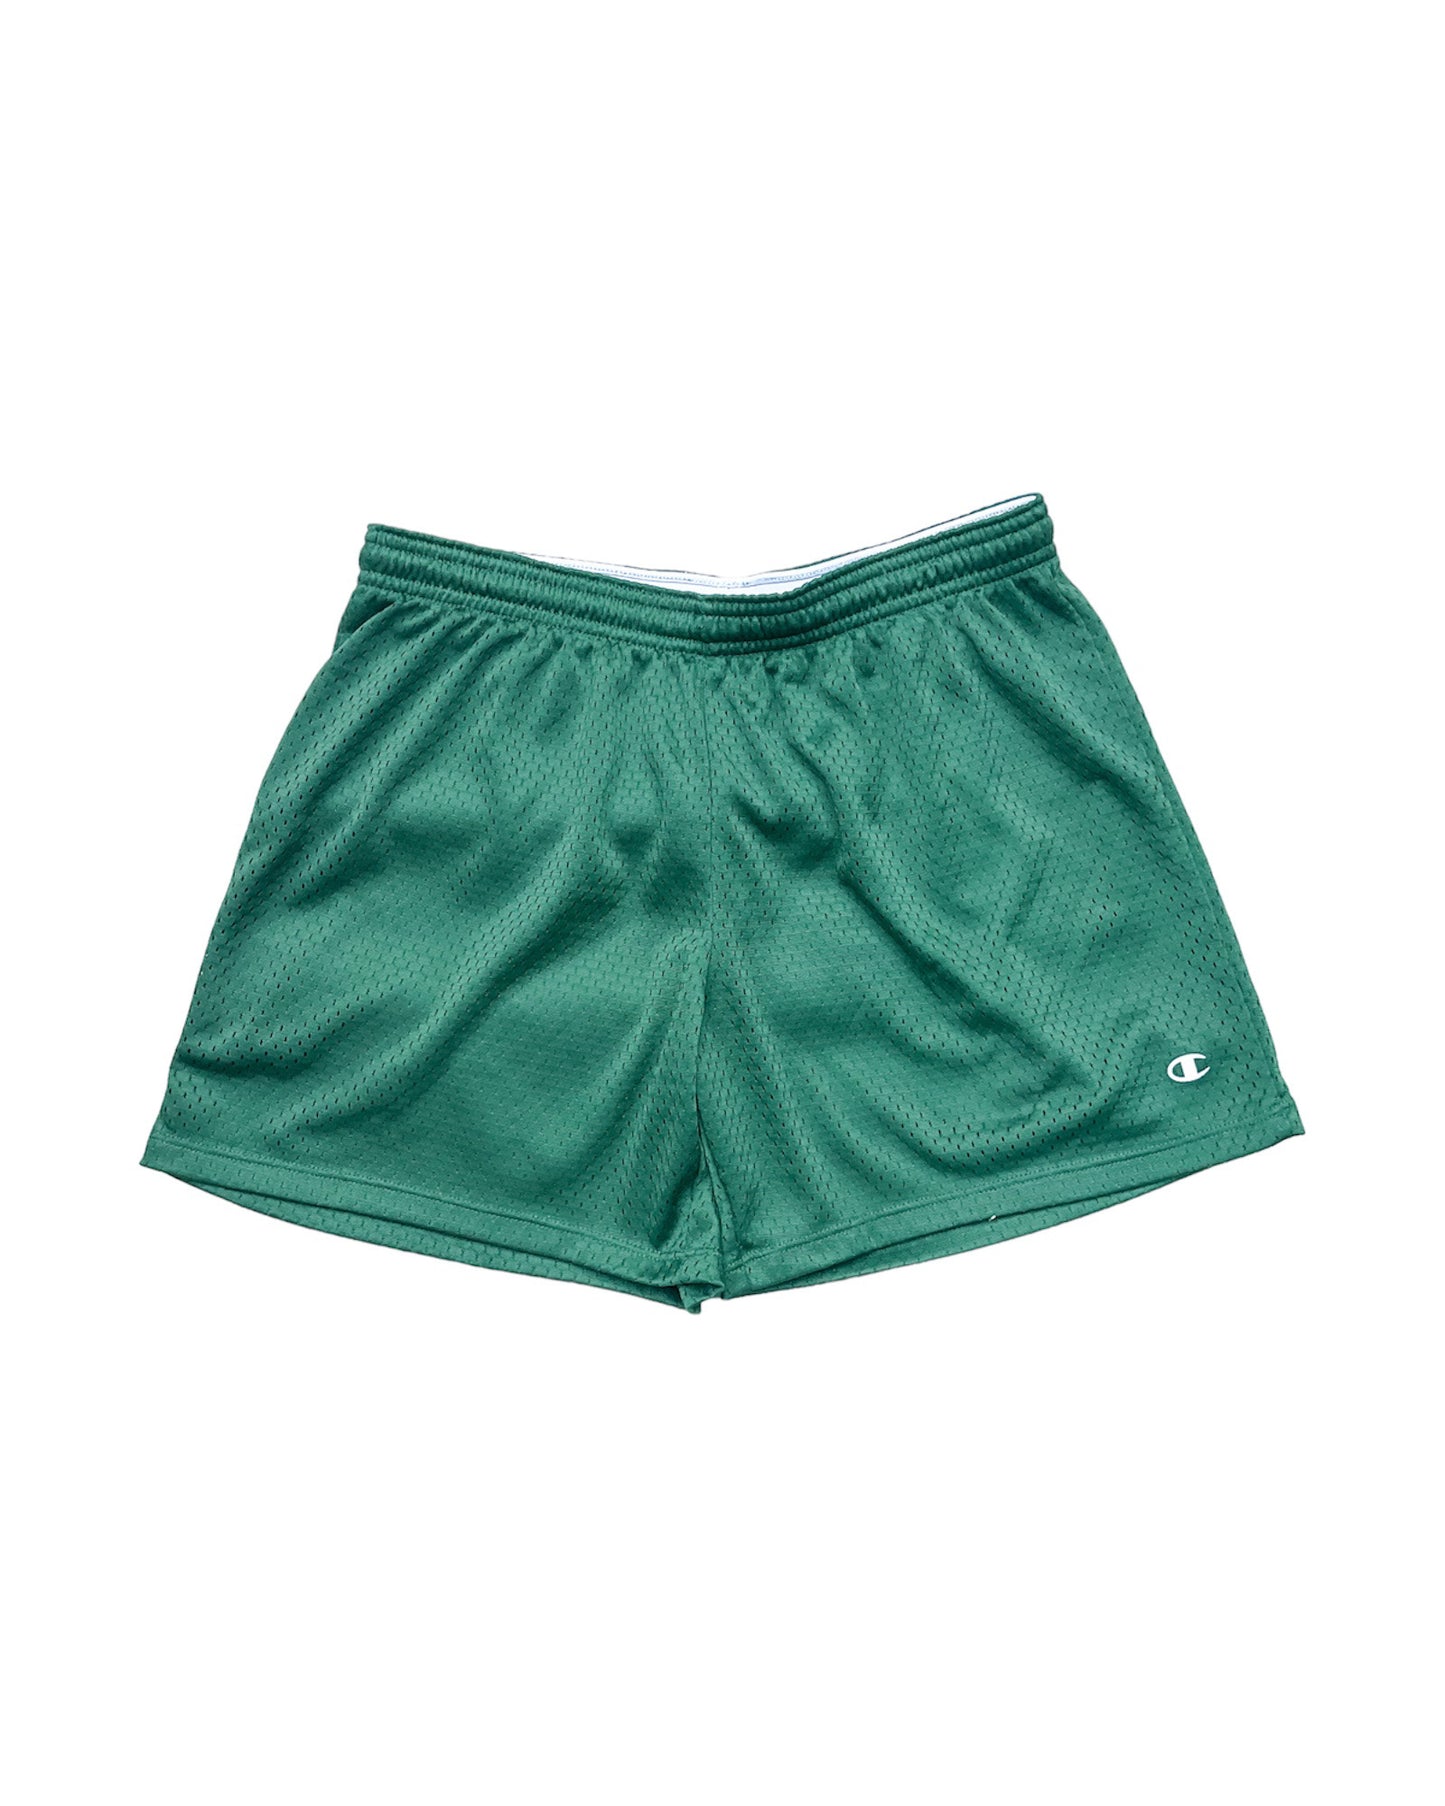 Green Champion Bball Shorts